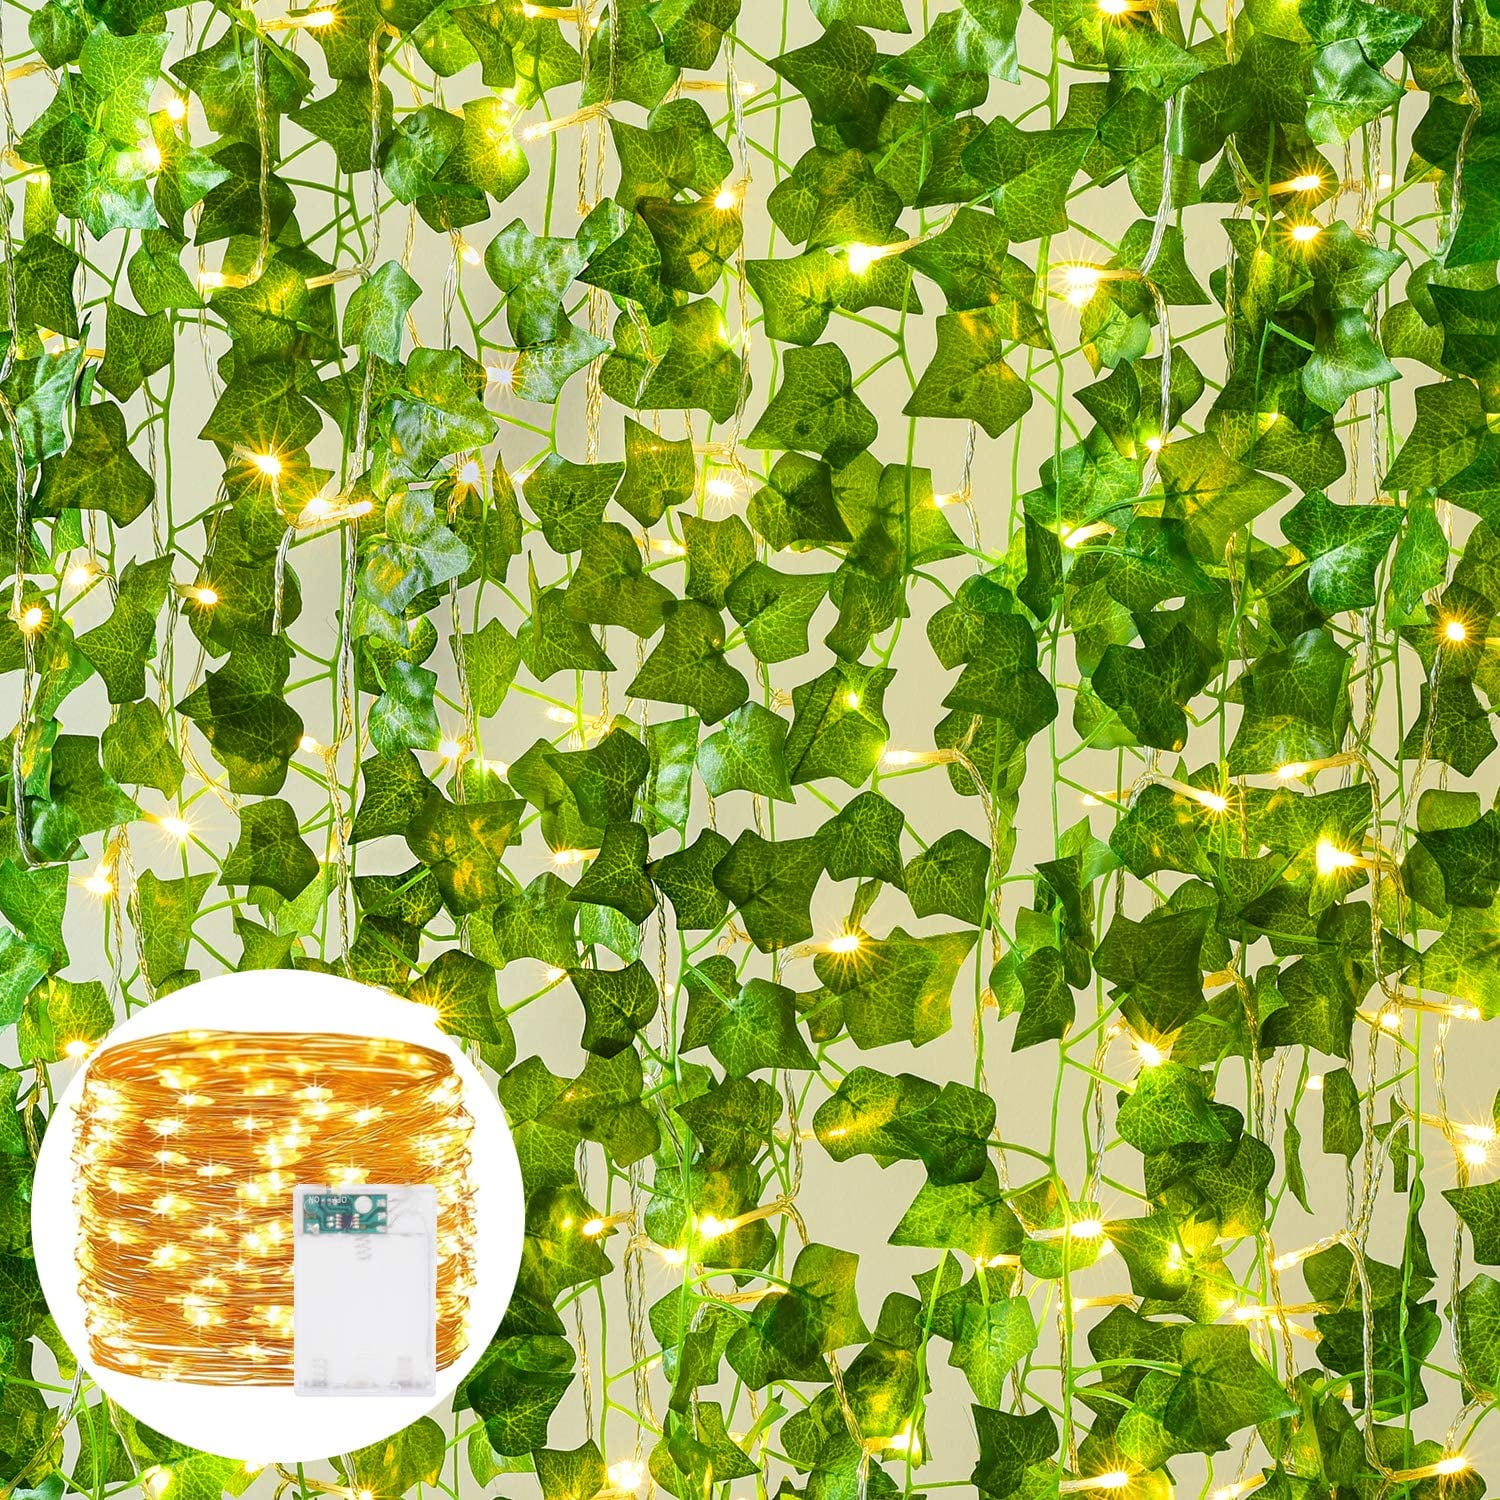 US Artificial Hanging Plant 84 Feet Silk Ivy Vine Garland Fake Home Garden Decor